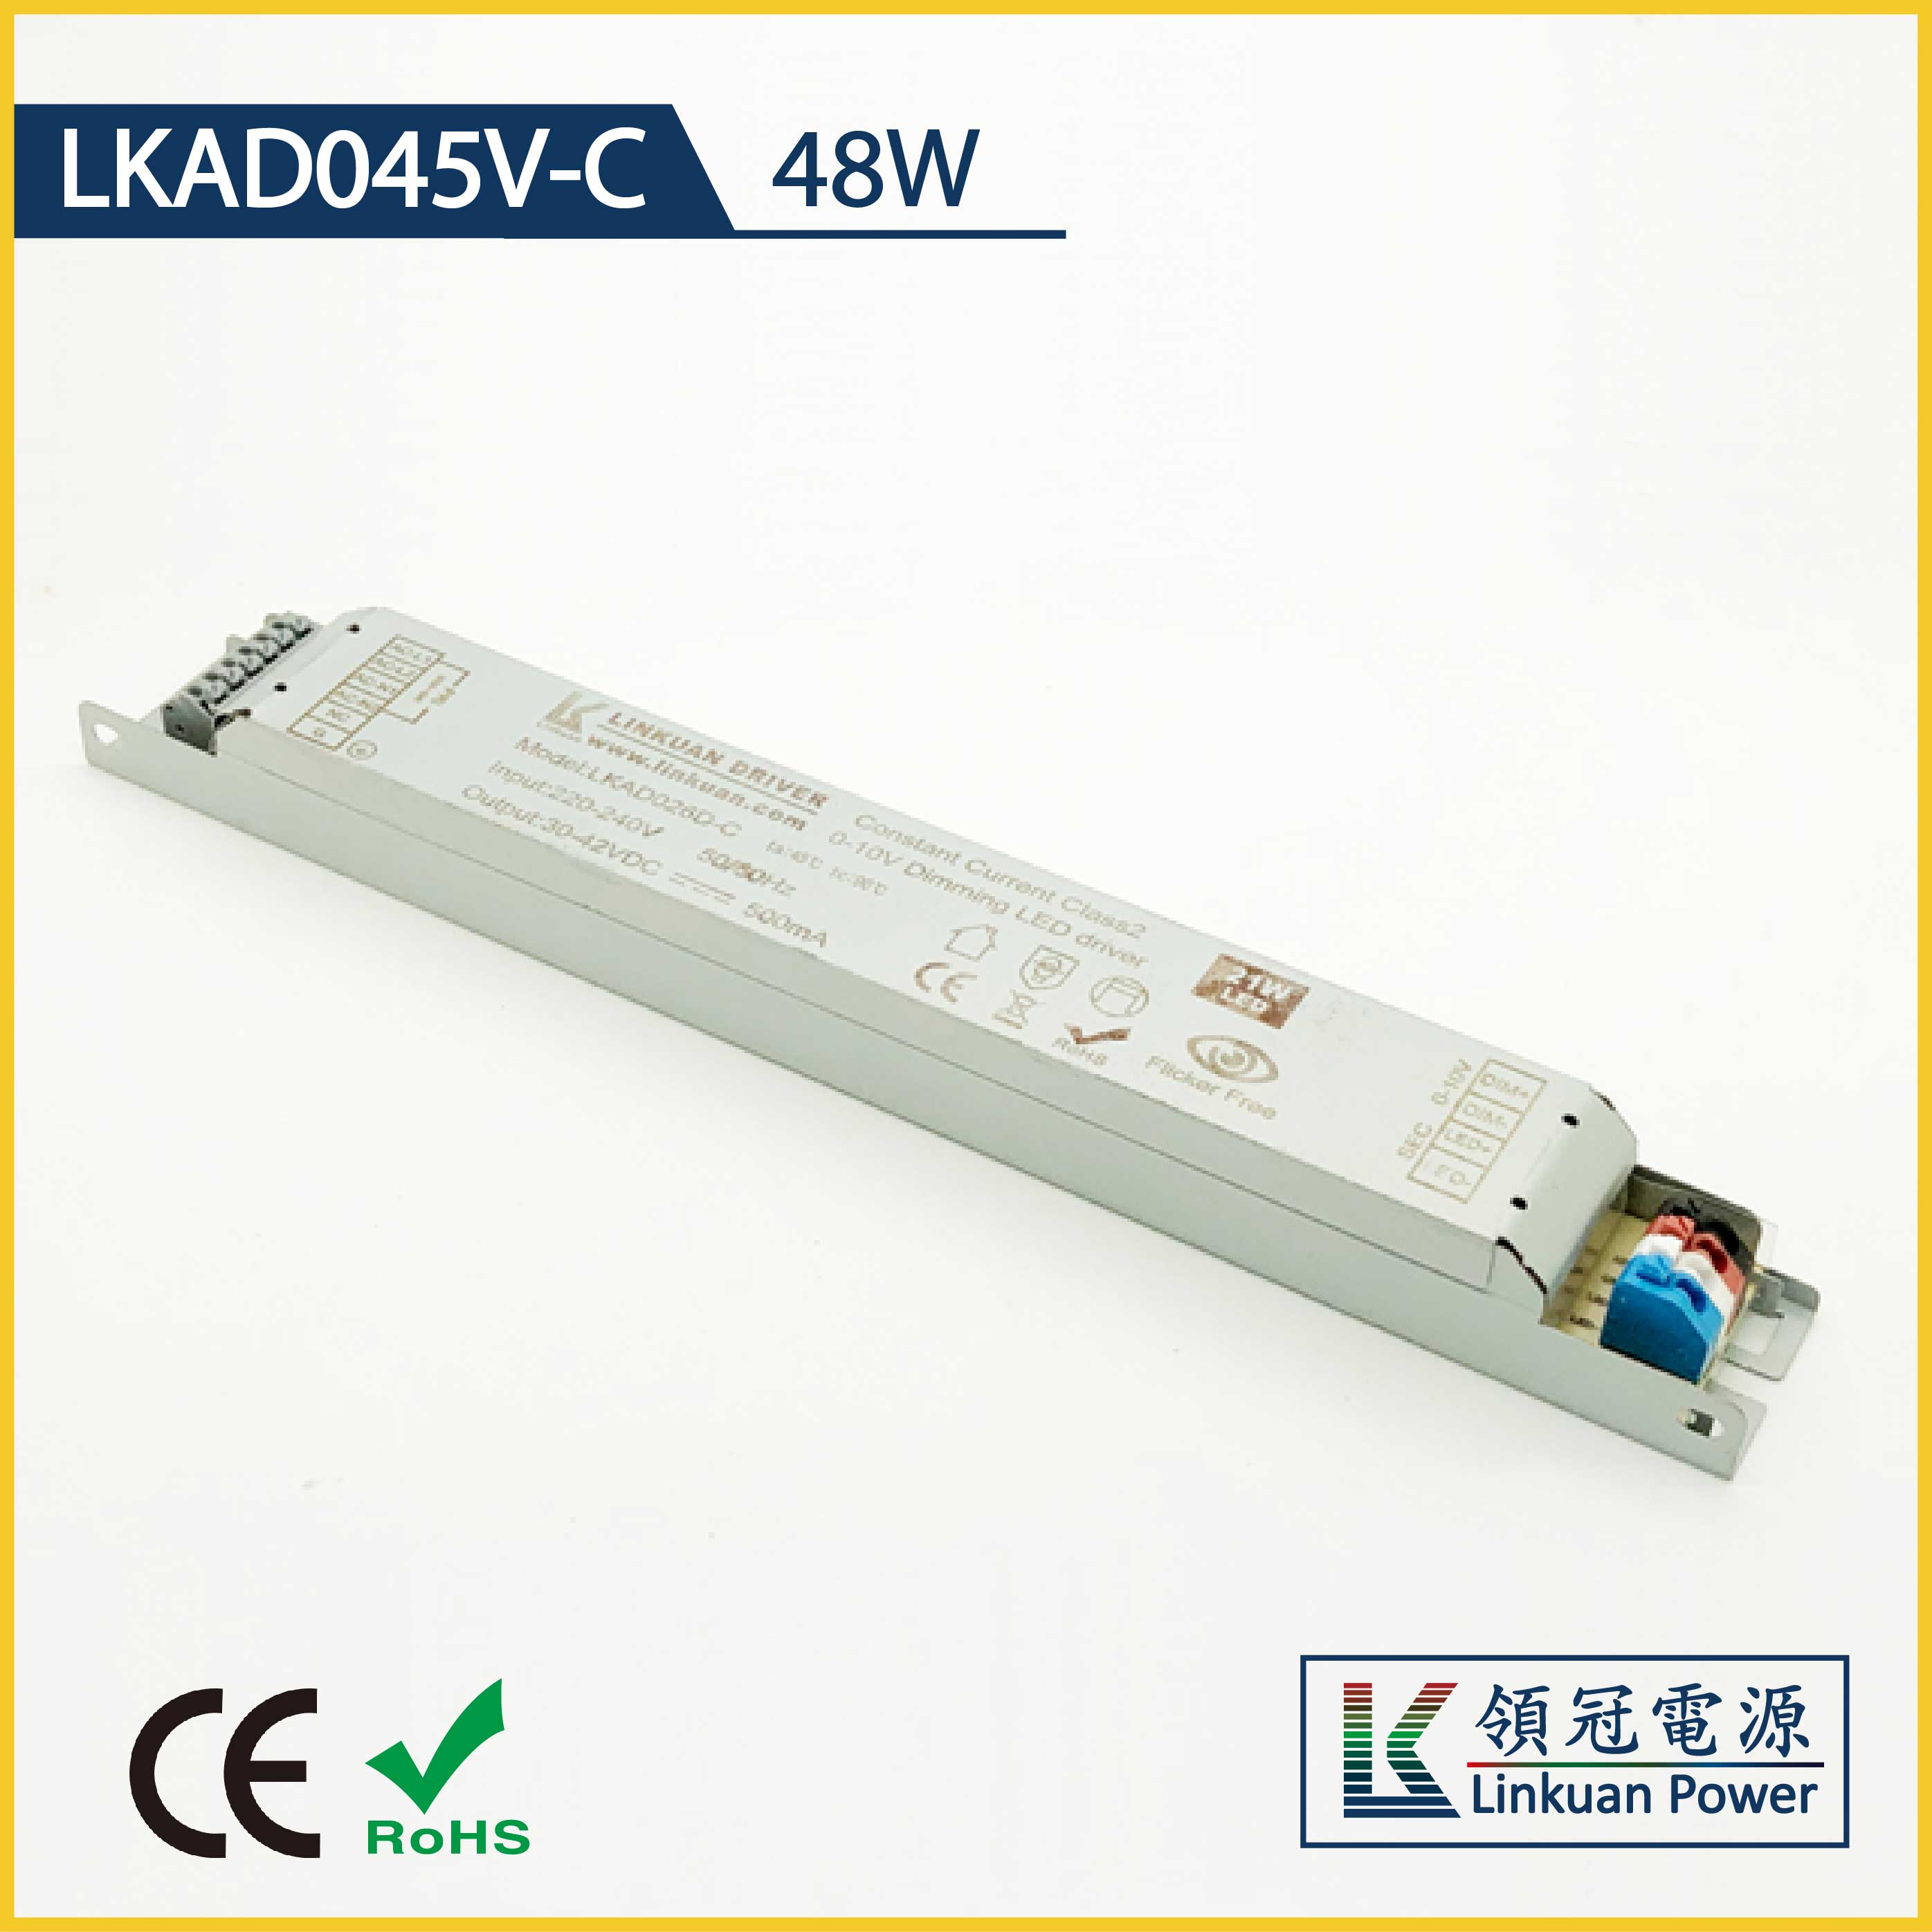 LKAD045V-C 48W 12/24V 4A/2A Linear Lamp 0-10V dimming  led driver